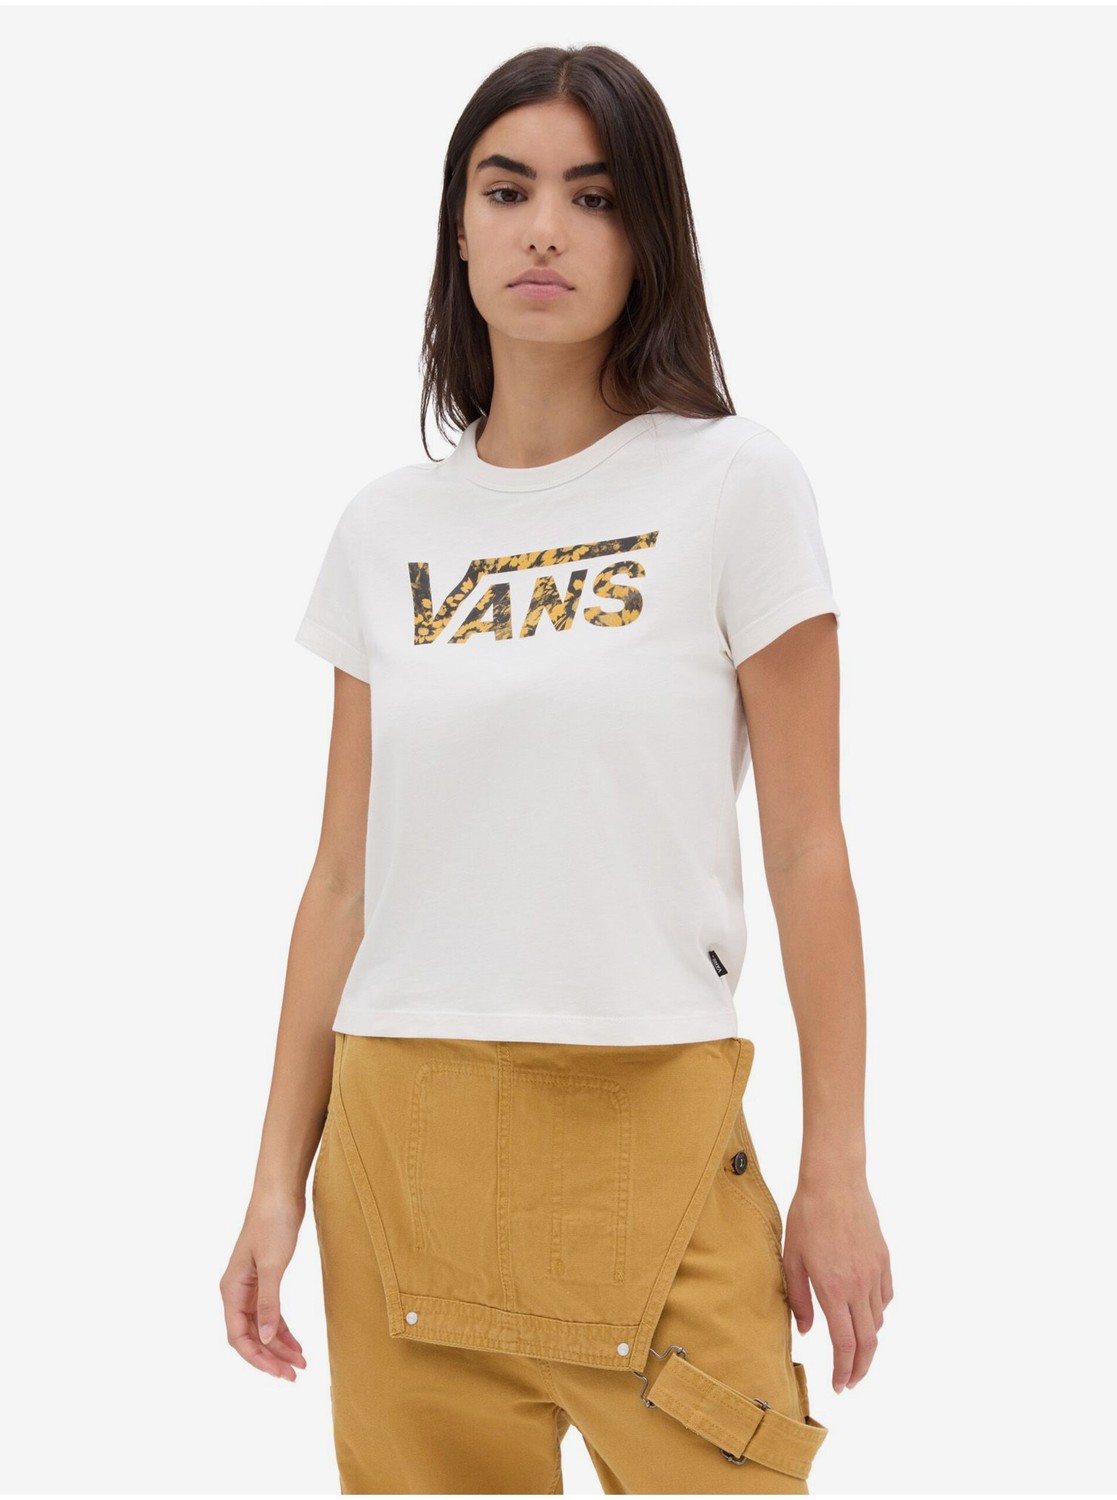 Bílé dámské tričko VANS Warped Floral - Dámské